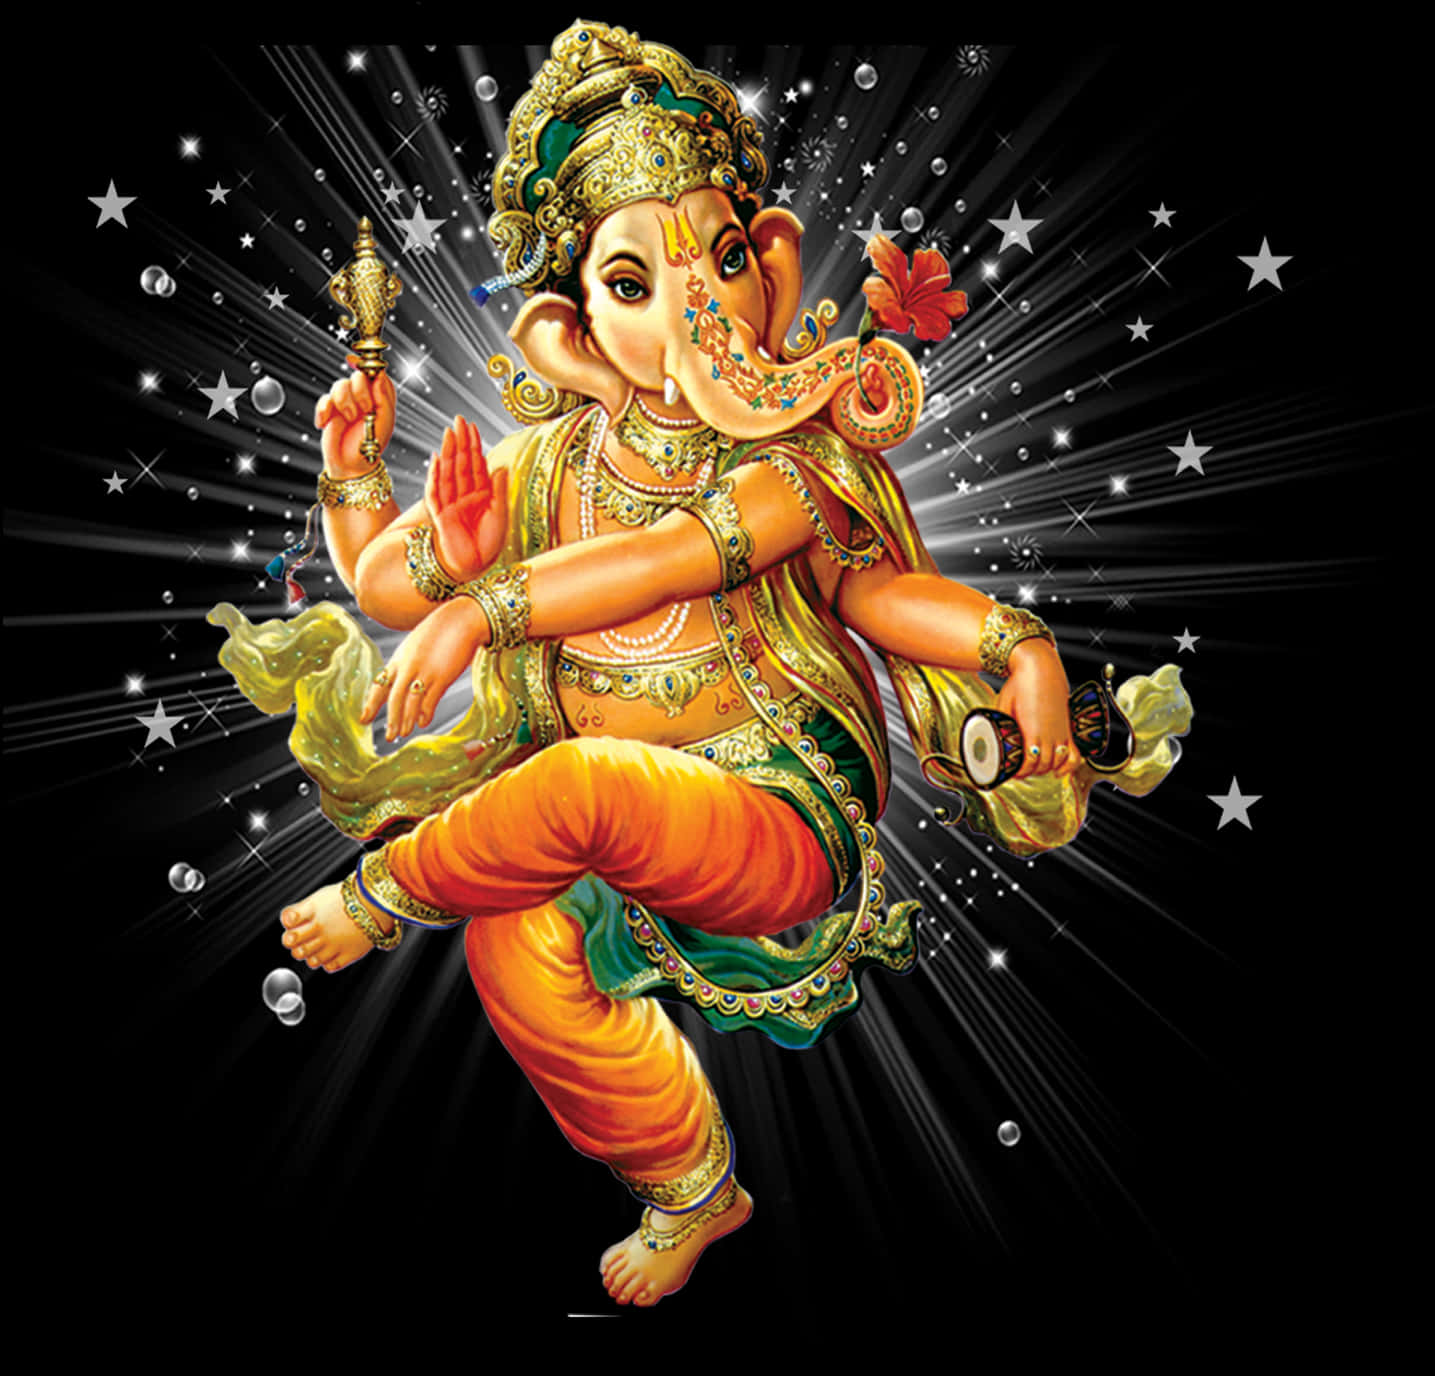 Radiant Lord Ganesha PNG image